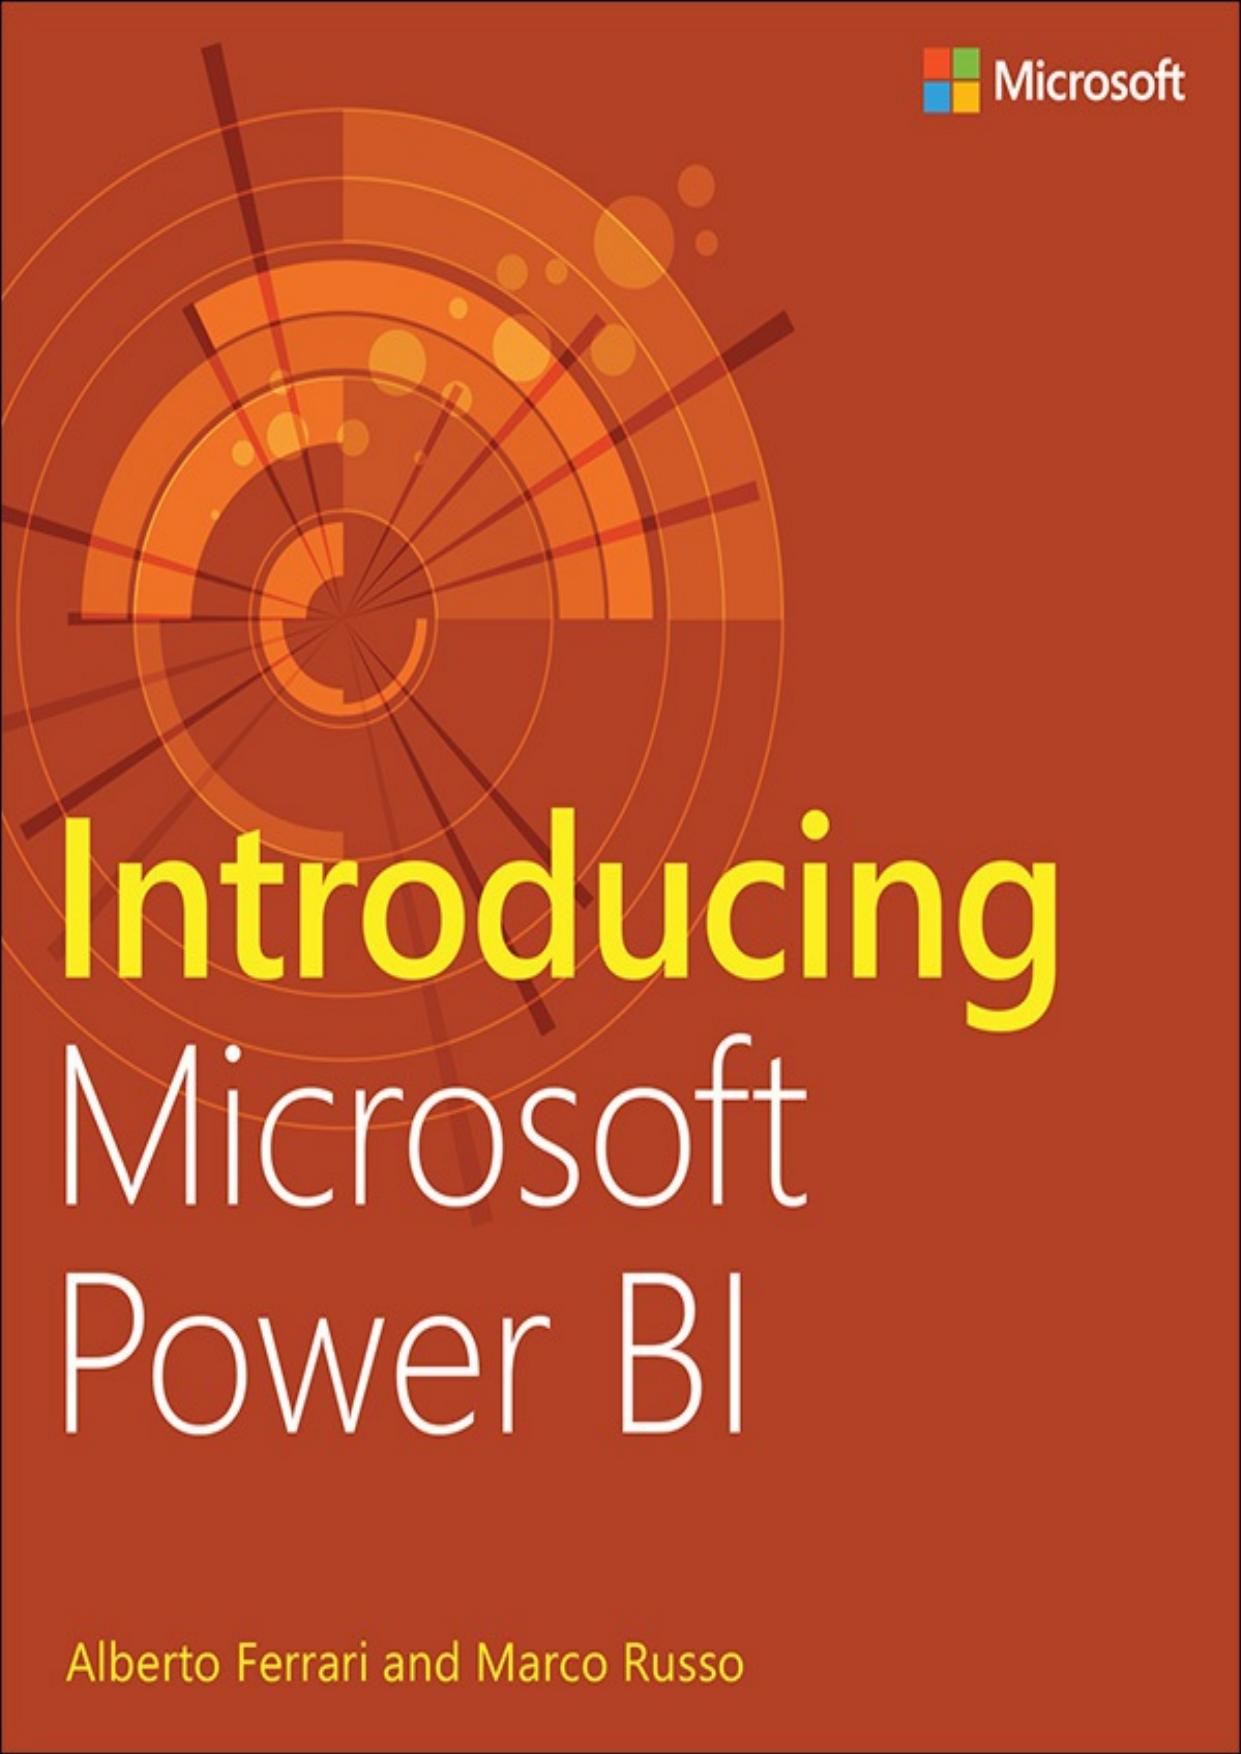 Introducing Microsoft Power BI by Alberto Ferrari & Marco Russo